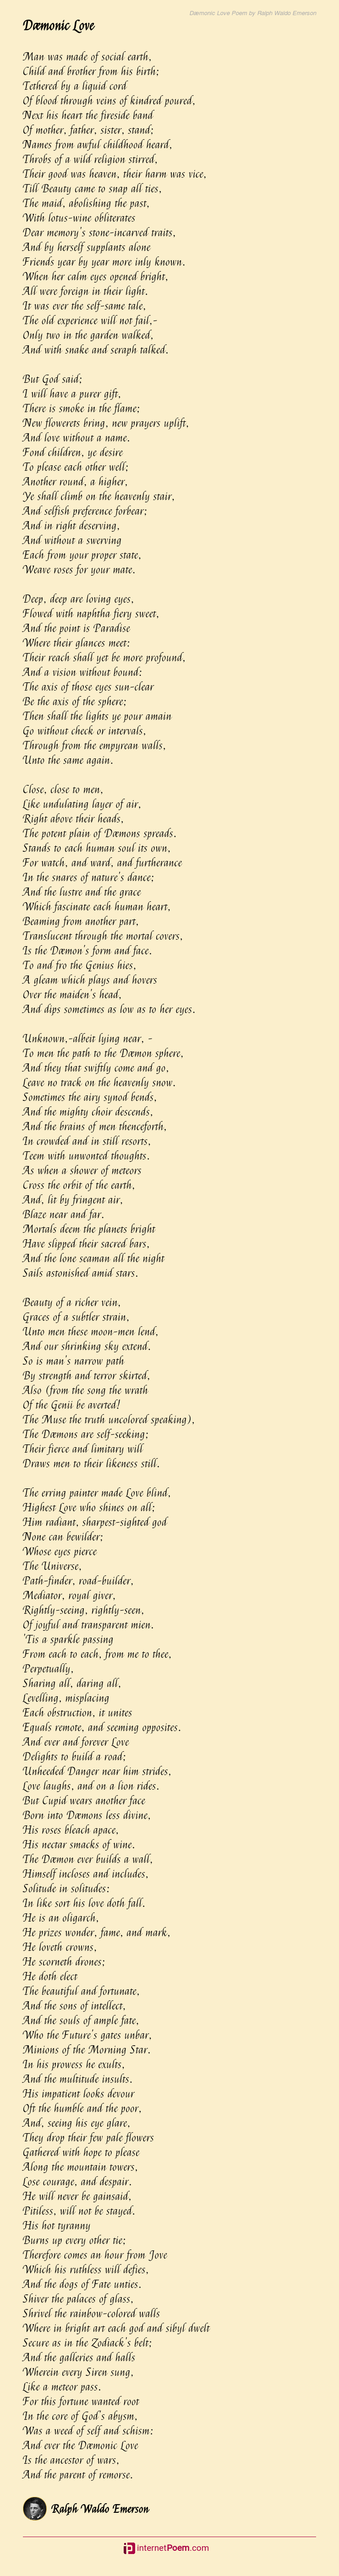 Daemonic Love Poem By Ralph Waldo Emerson